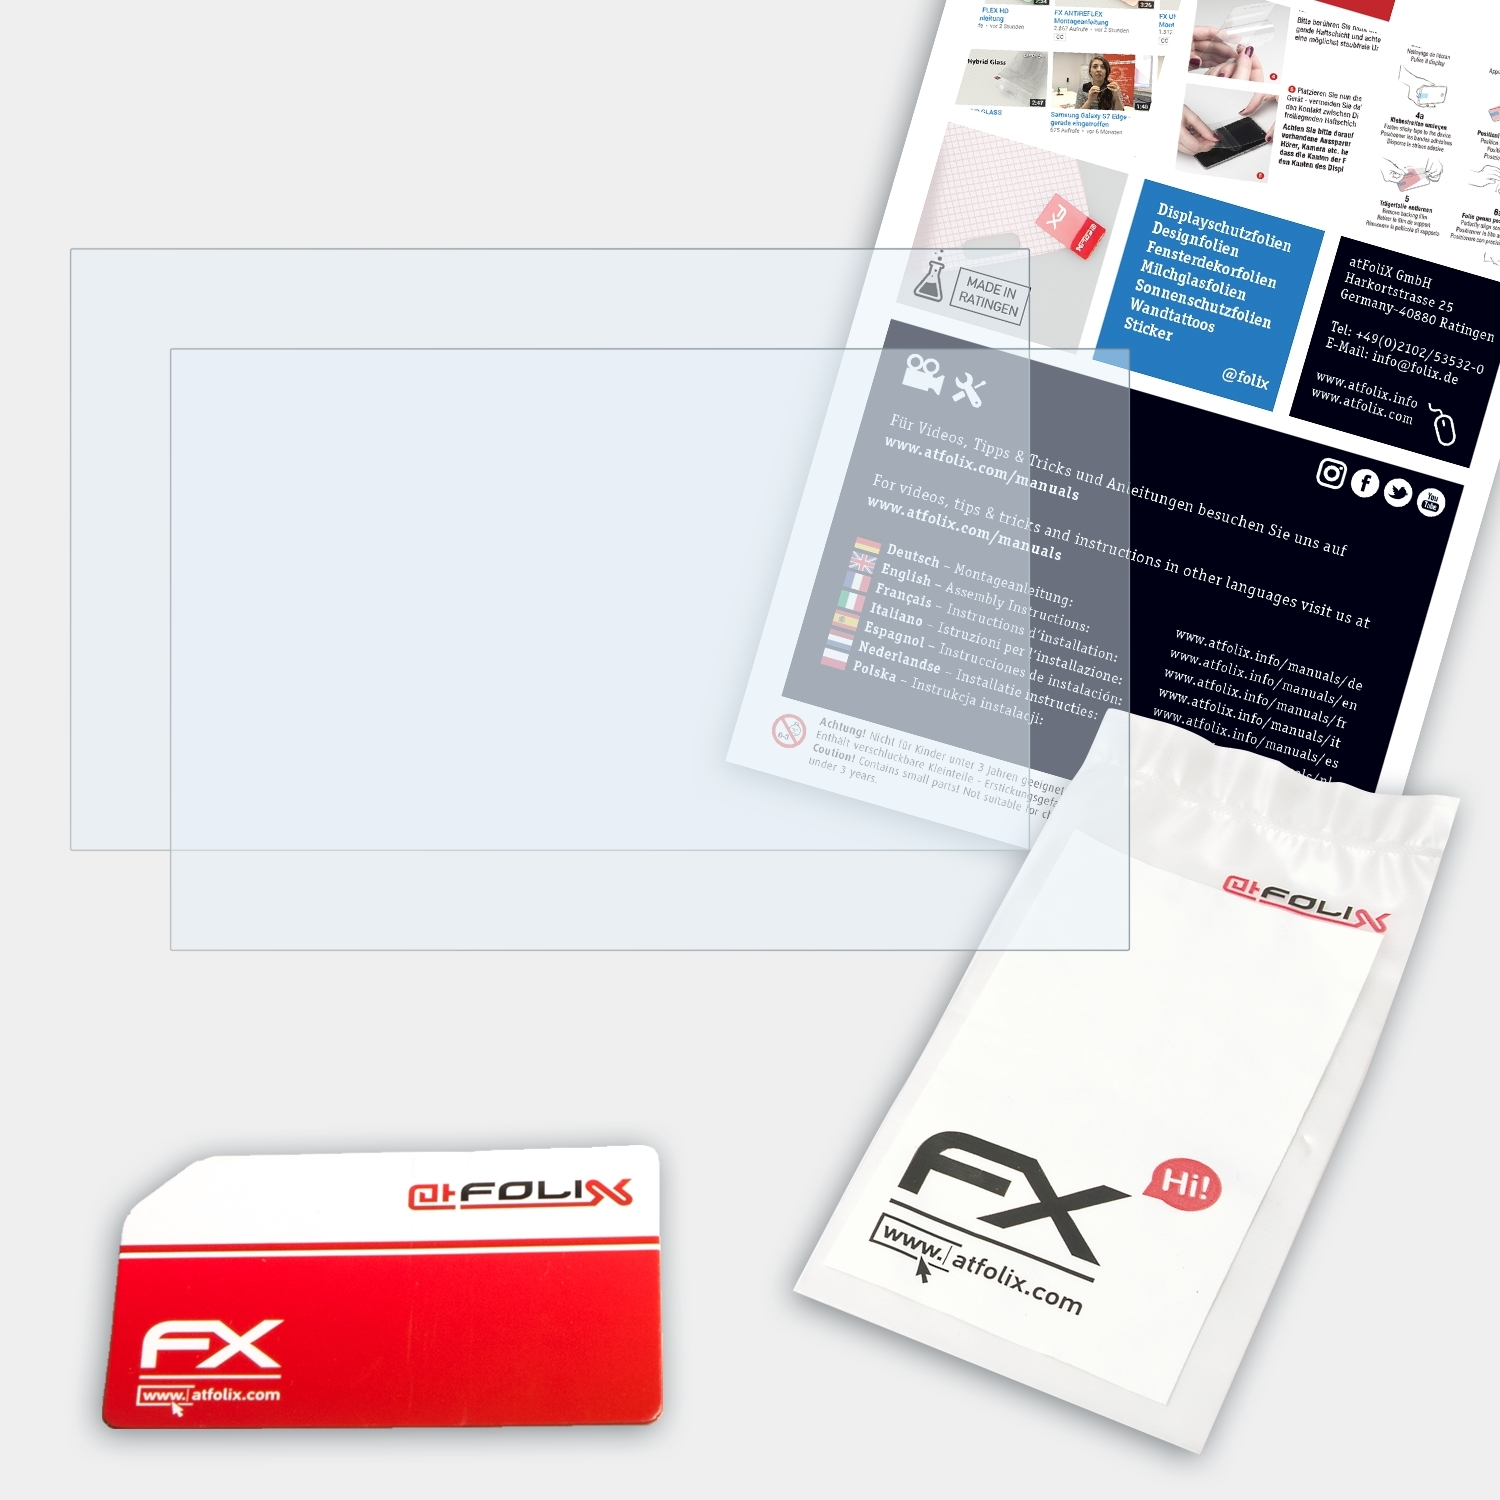 Lifebook FX-Clear 2x Fujitsu ATFOLIX T730) Displayschutz(für